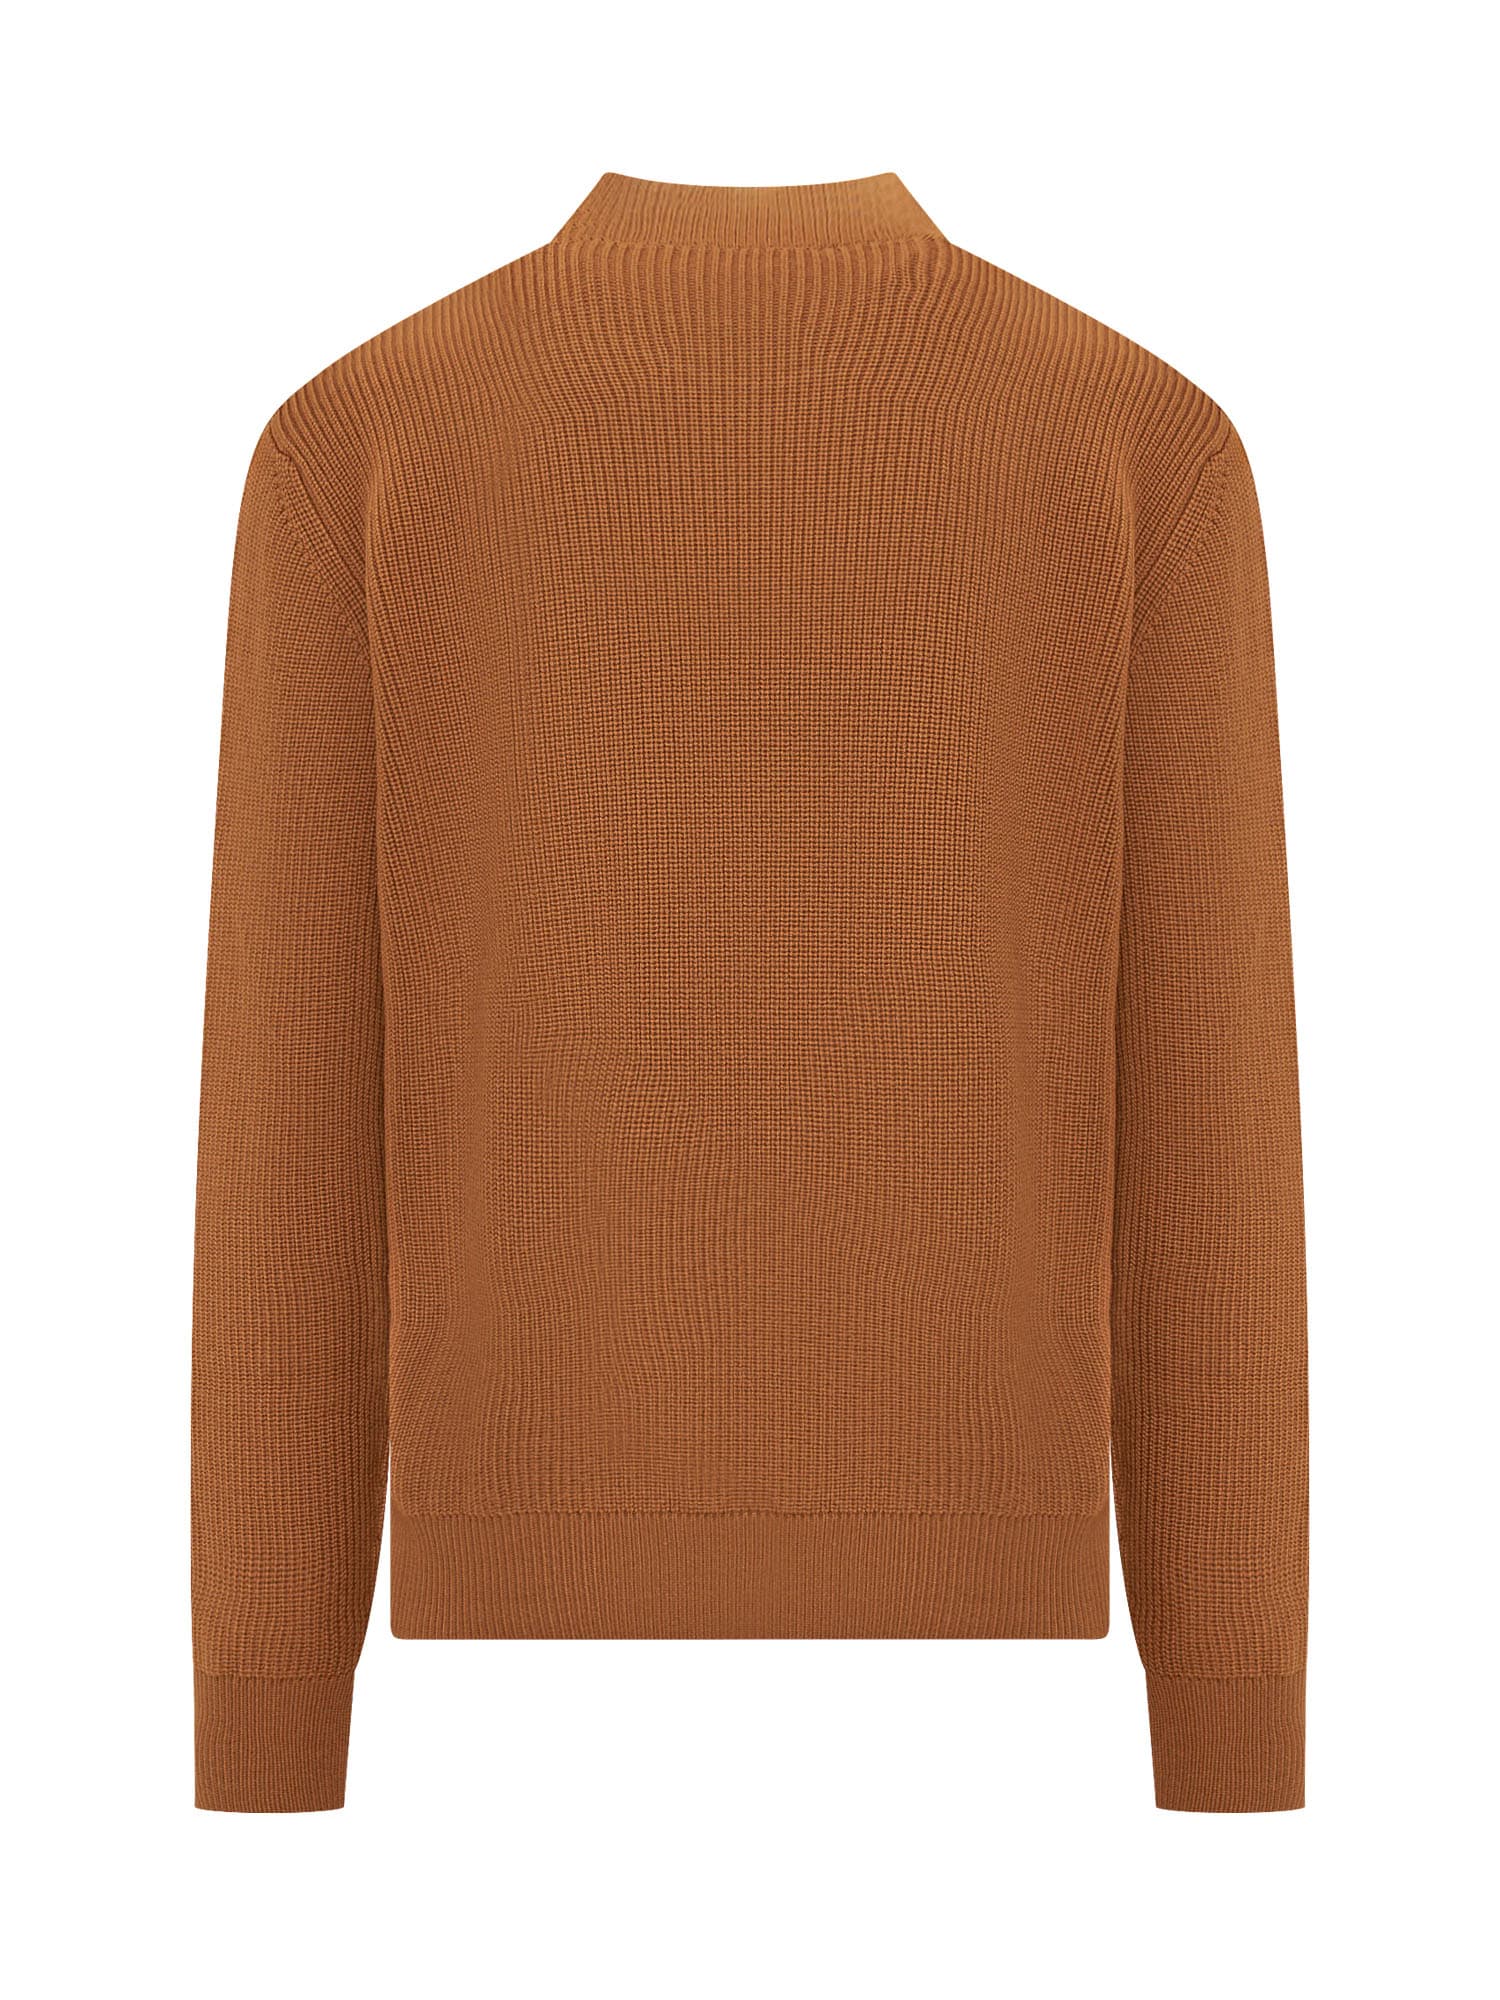 100% Virgin wool crewneck sweater in Brown: Luxury Italian Knitwear